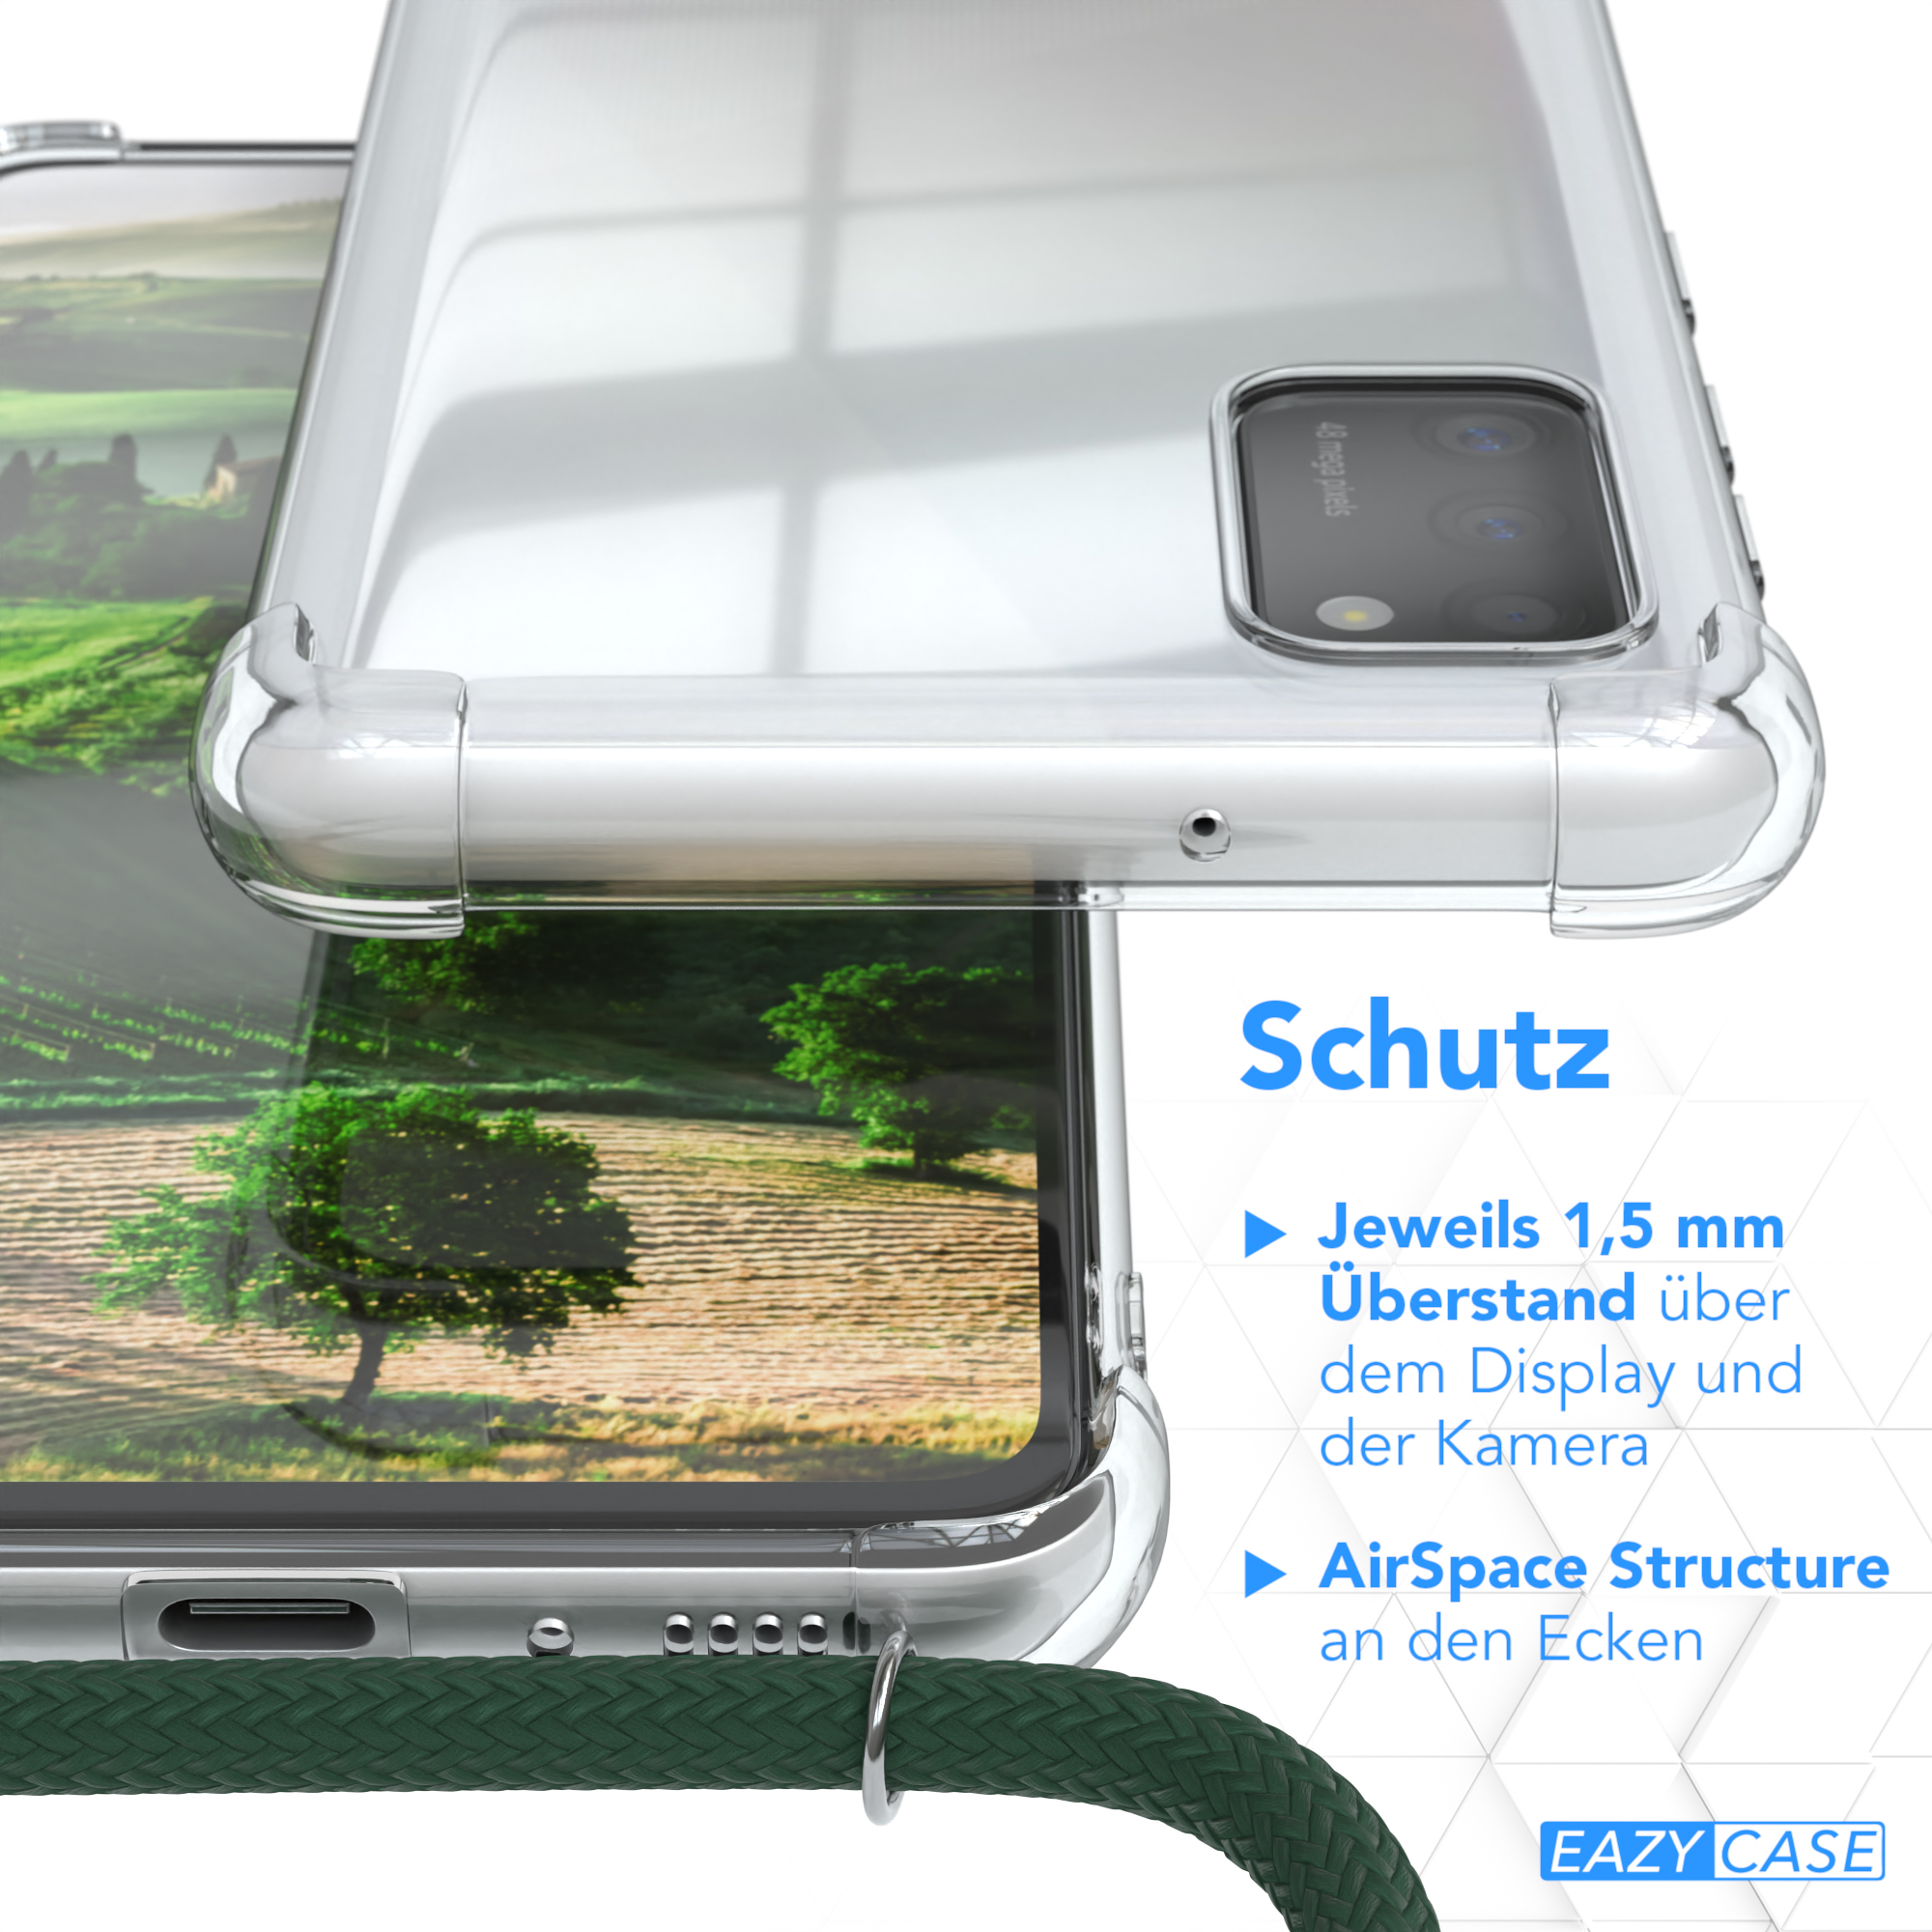 Samsung, A41, Clear Cover Gold Umhängetasche, EAZY mit Galaxy Clips Umhängeband, Grün CASE /